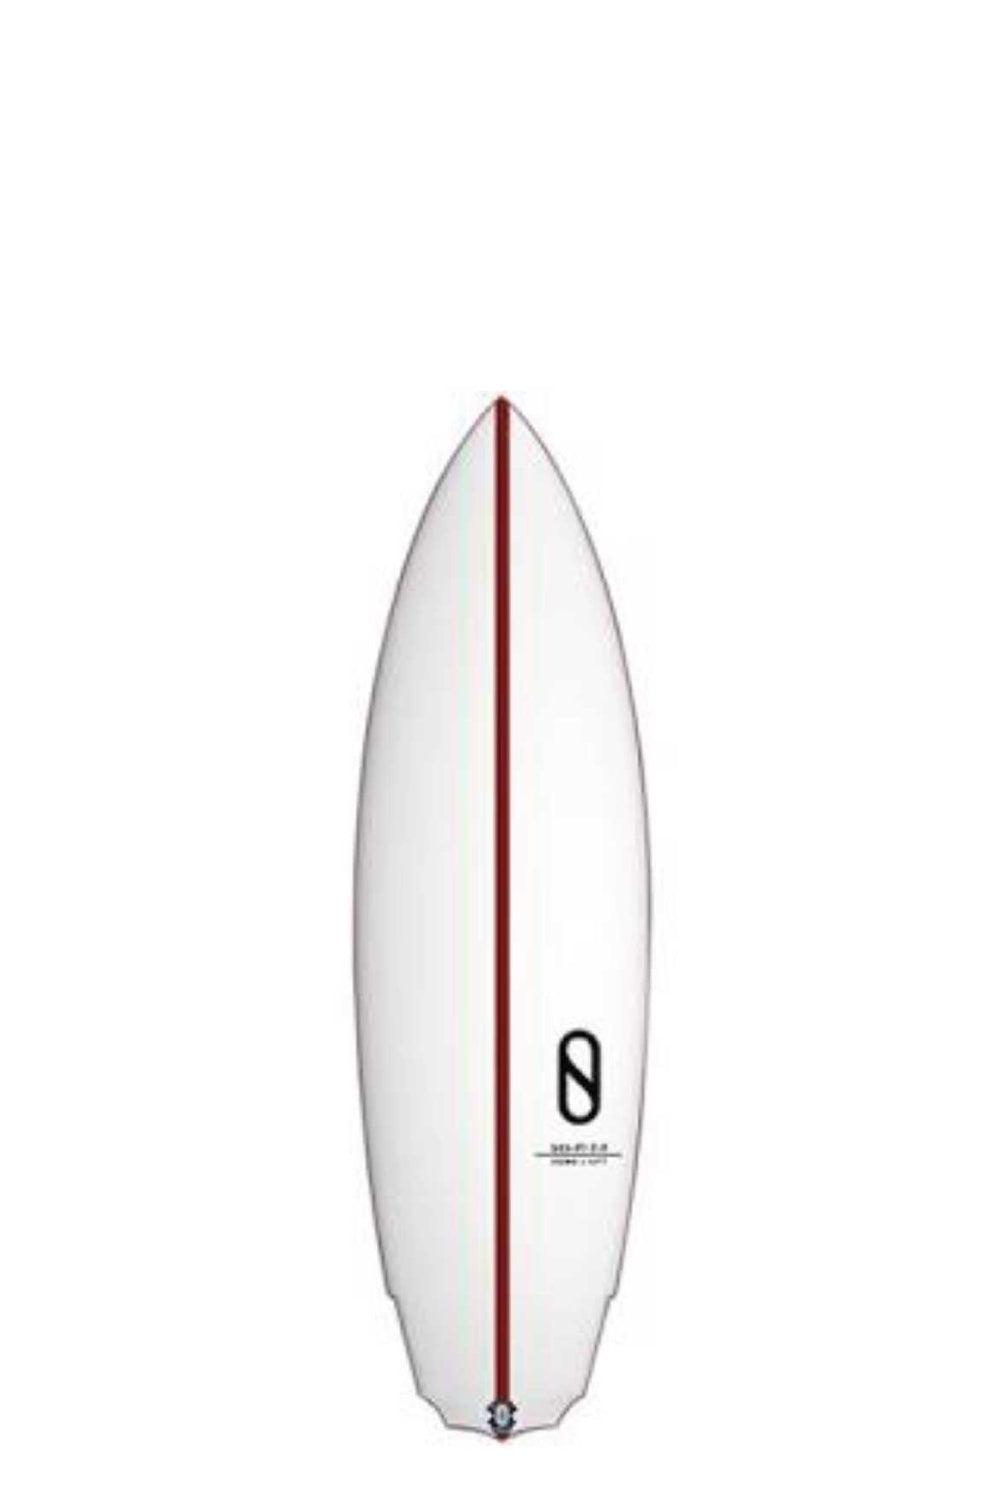 Slater Designs SCI-FI 2.0 GROM Surfboard